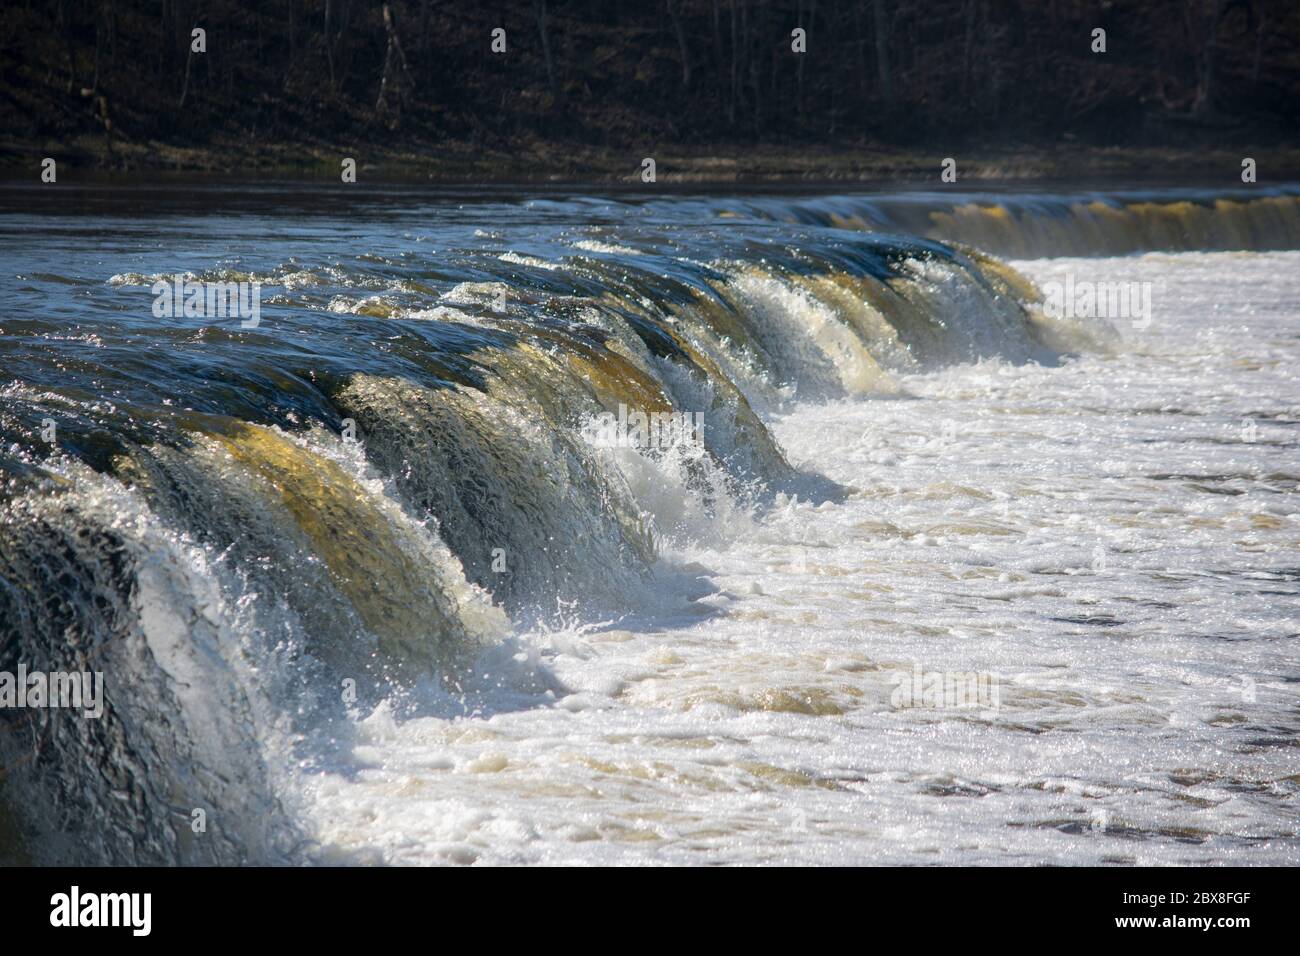 Venta Rapid waterfall - Ventas Rumba, the widest waterfall in Europe, Kuldiga, Latvia Stock Photo